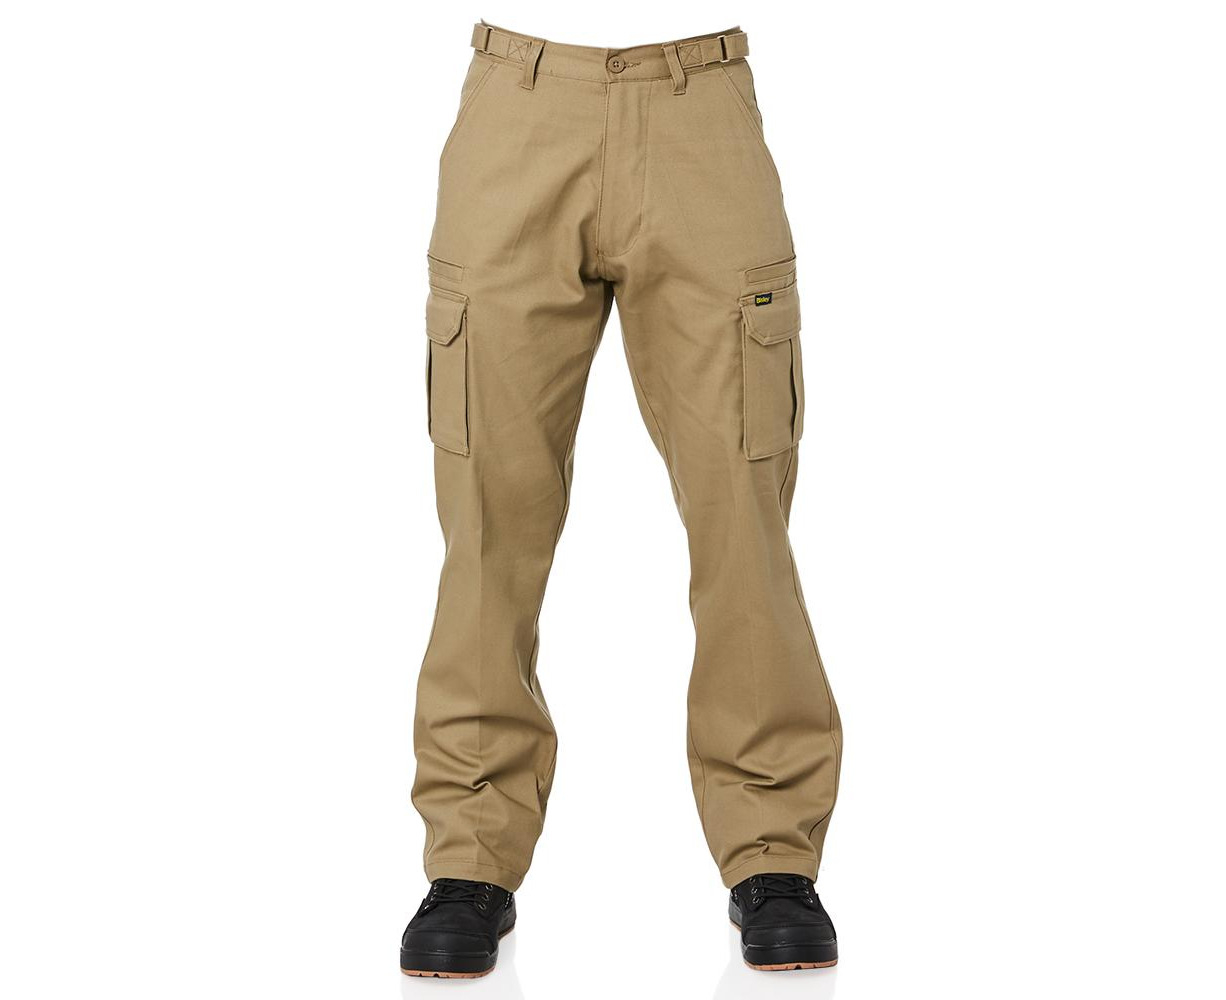 8 Pocket Cargo Pants - Khaki | Catch.com.au